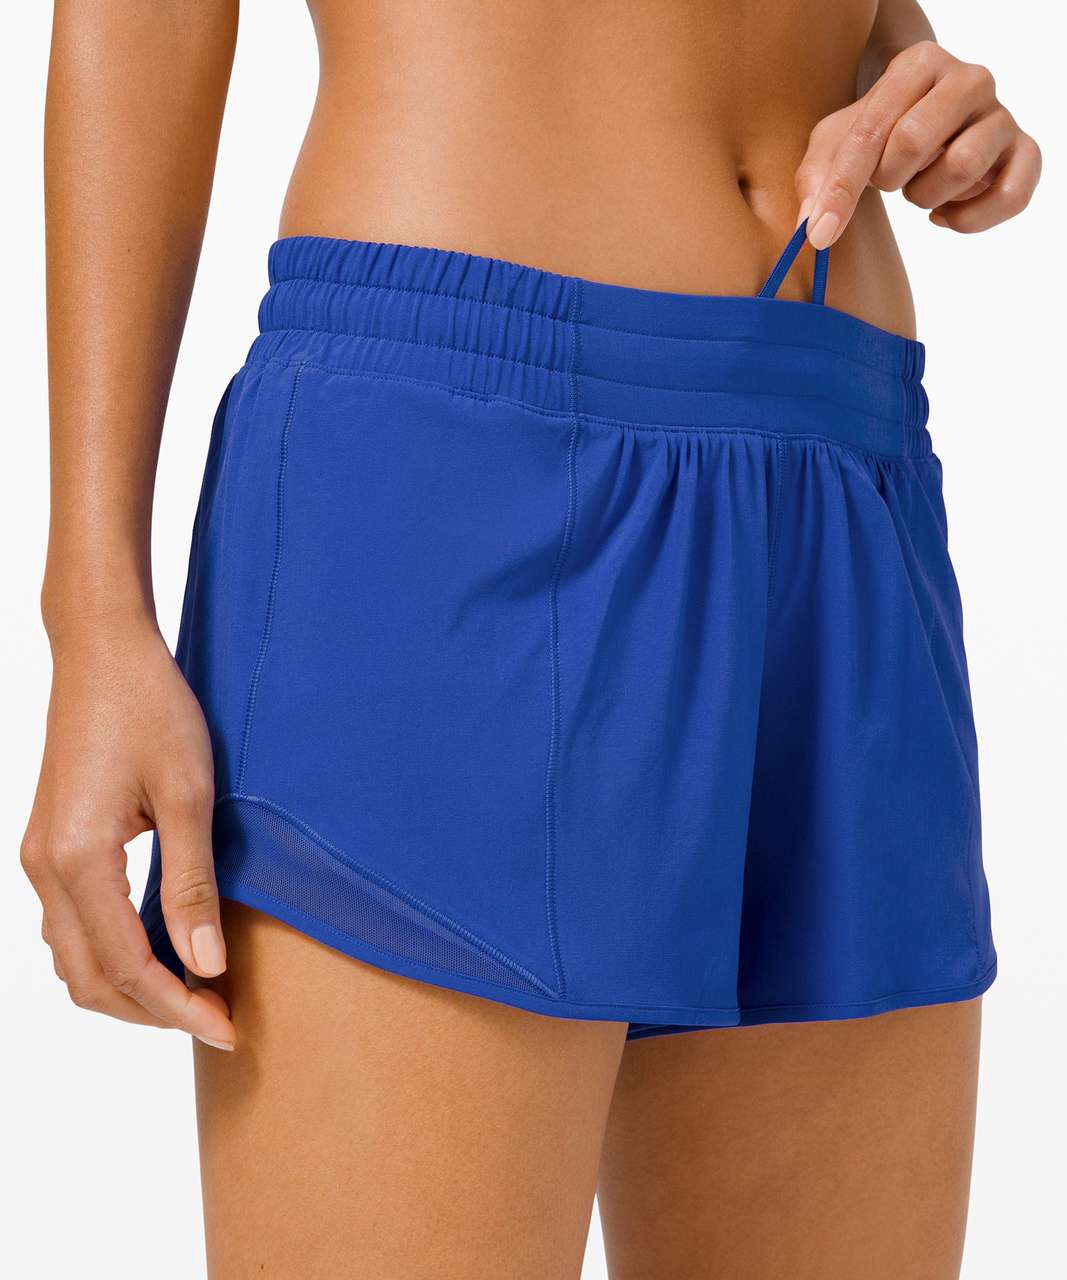 Penn State lululemon Women's High Rise Hotty Hot 2.5 Shorts